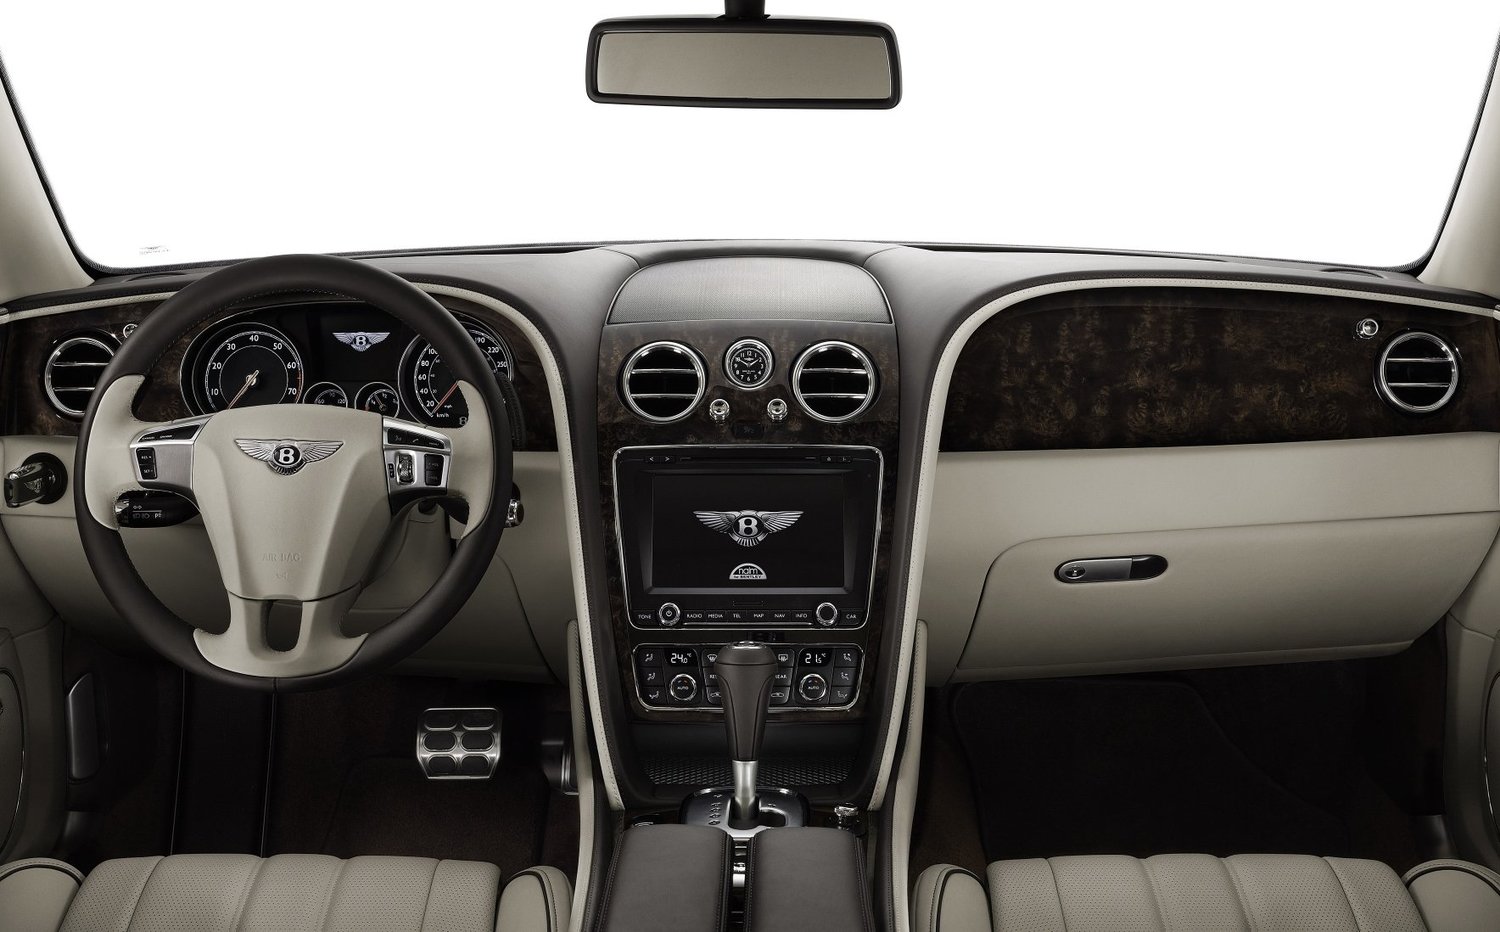 седан Bentley Flying Spur 2013 - 2016г выпуска модификация 4.0 AT (507 л.с.) 4×4